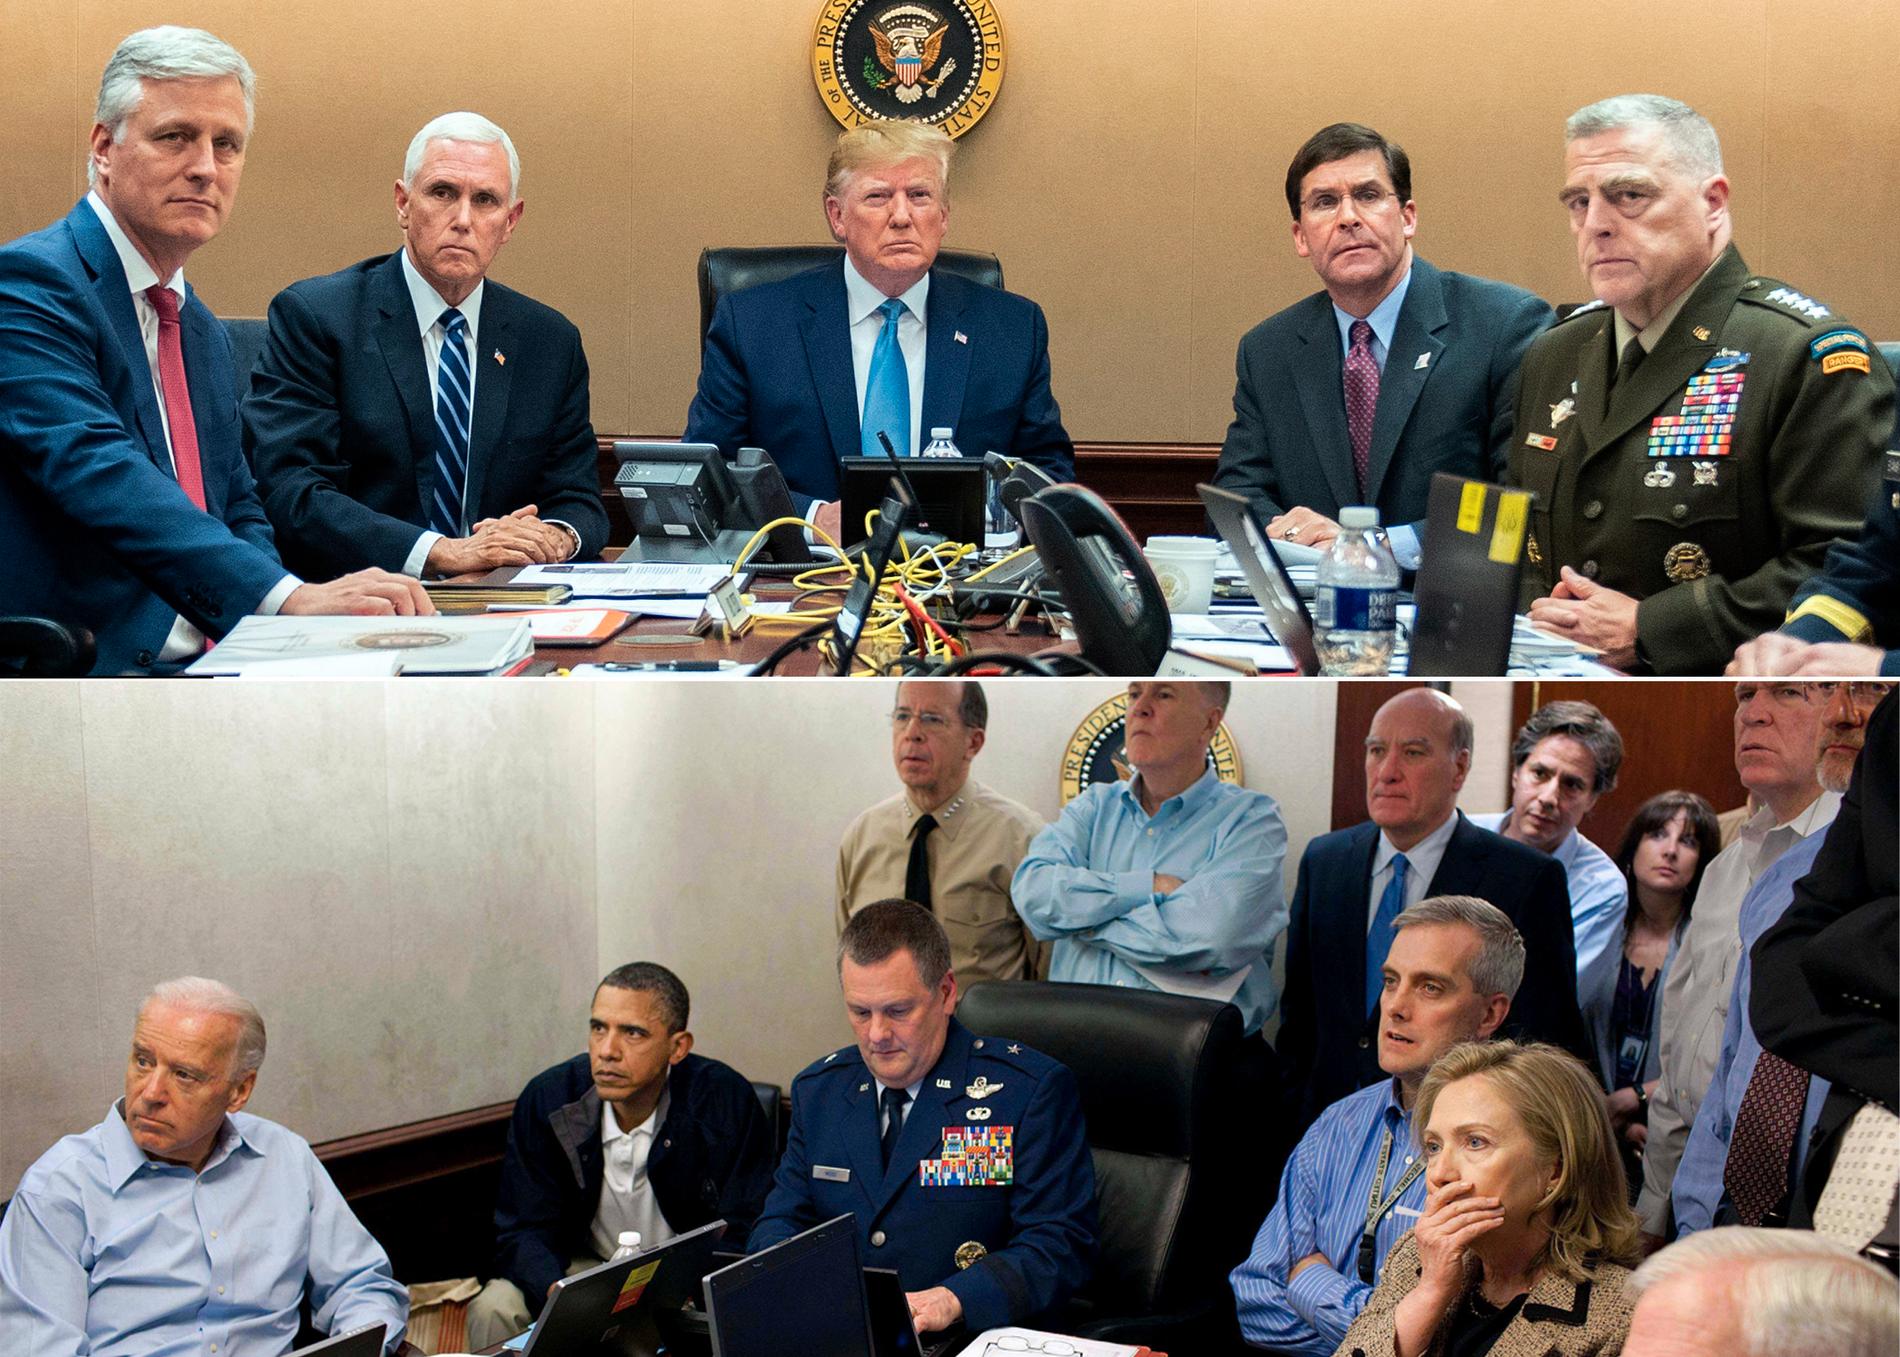 Ovan: Donald Trump med stab i Vita husets "situation room" under tillslaget mot Abu Bakr al-Baghdadi. Nedan: Barack Obama i samma rum under tillslaget mot Usama bin Ladin 2011. Arkivbild.